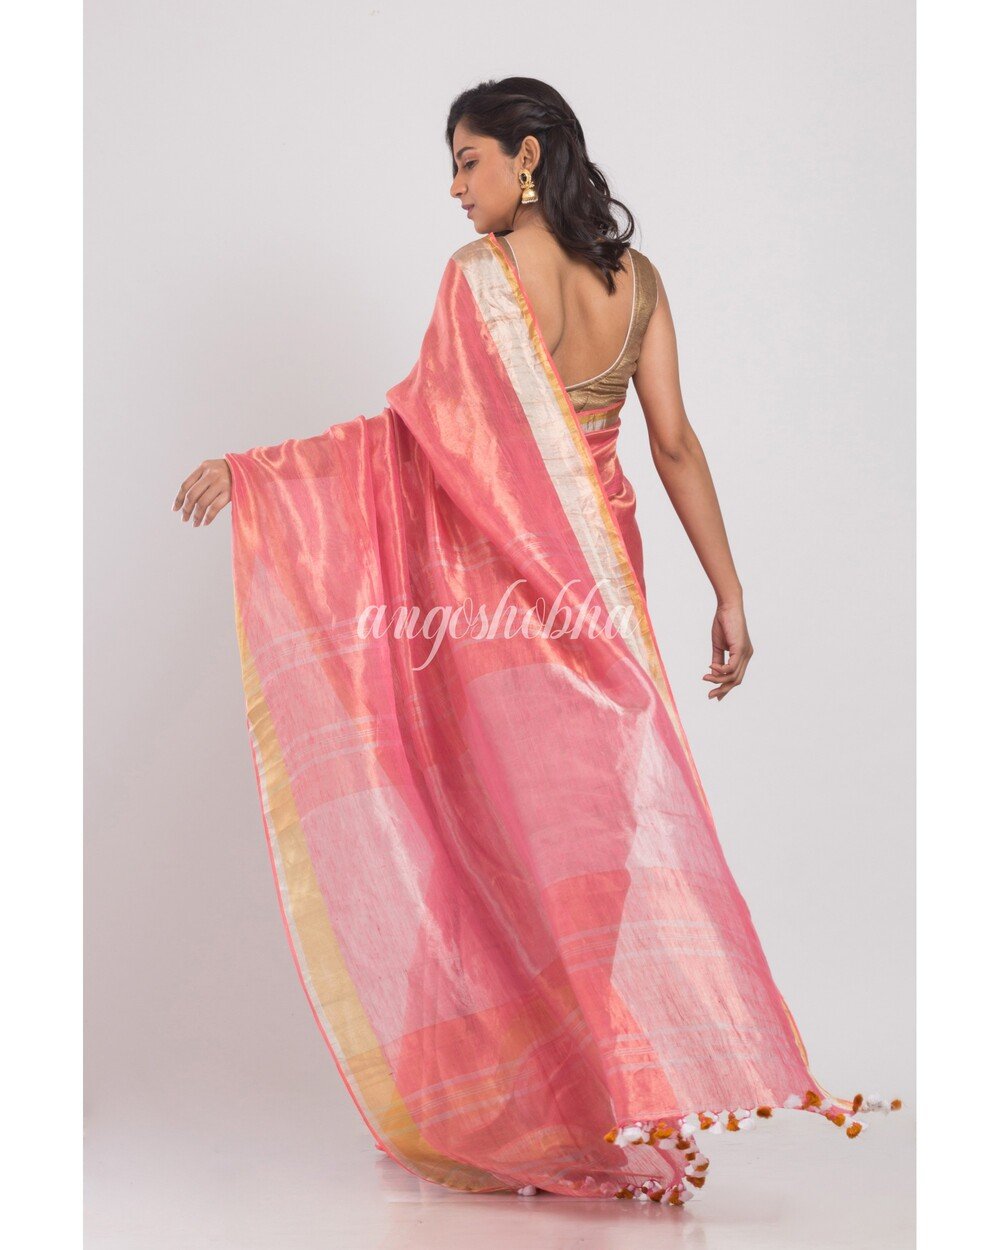 Women's Gold Silver Pink Handwoven Linen Tissue Saree - Angoshobha